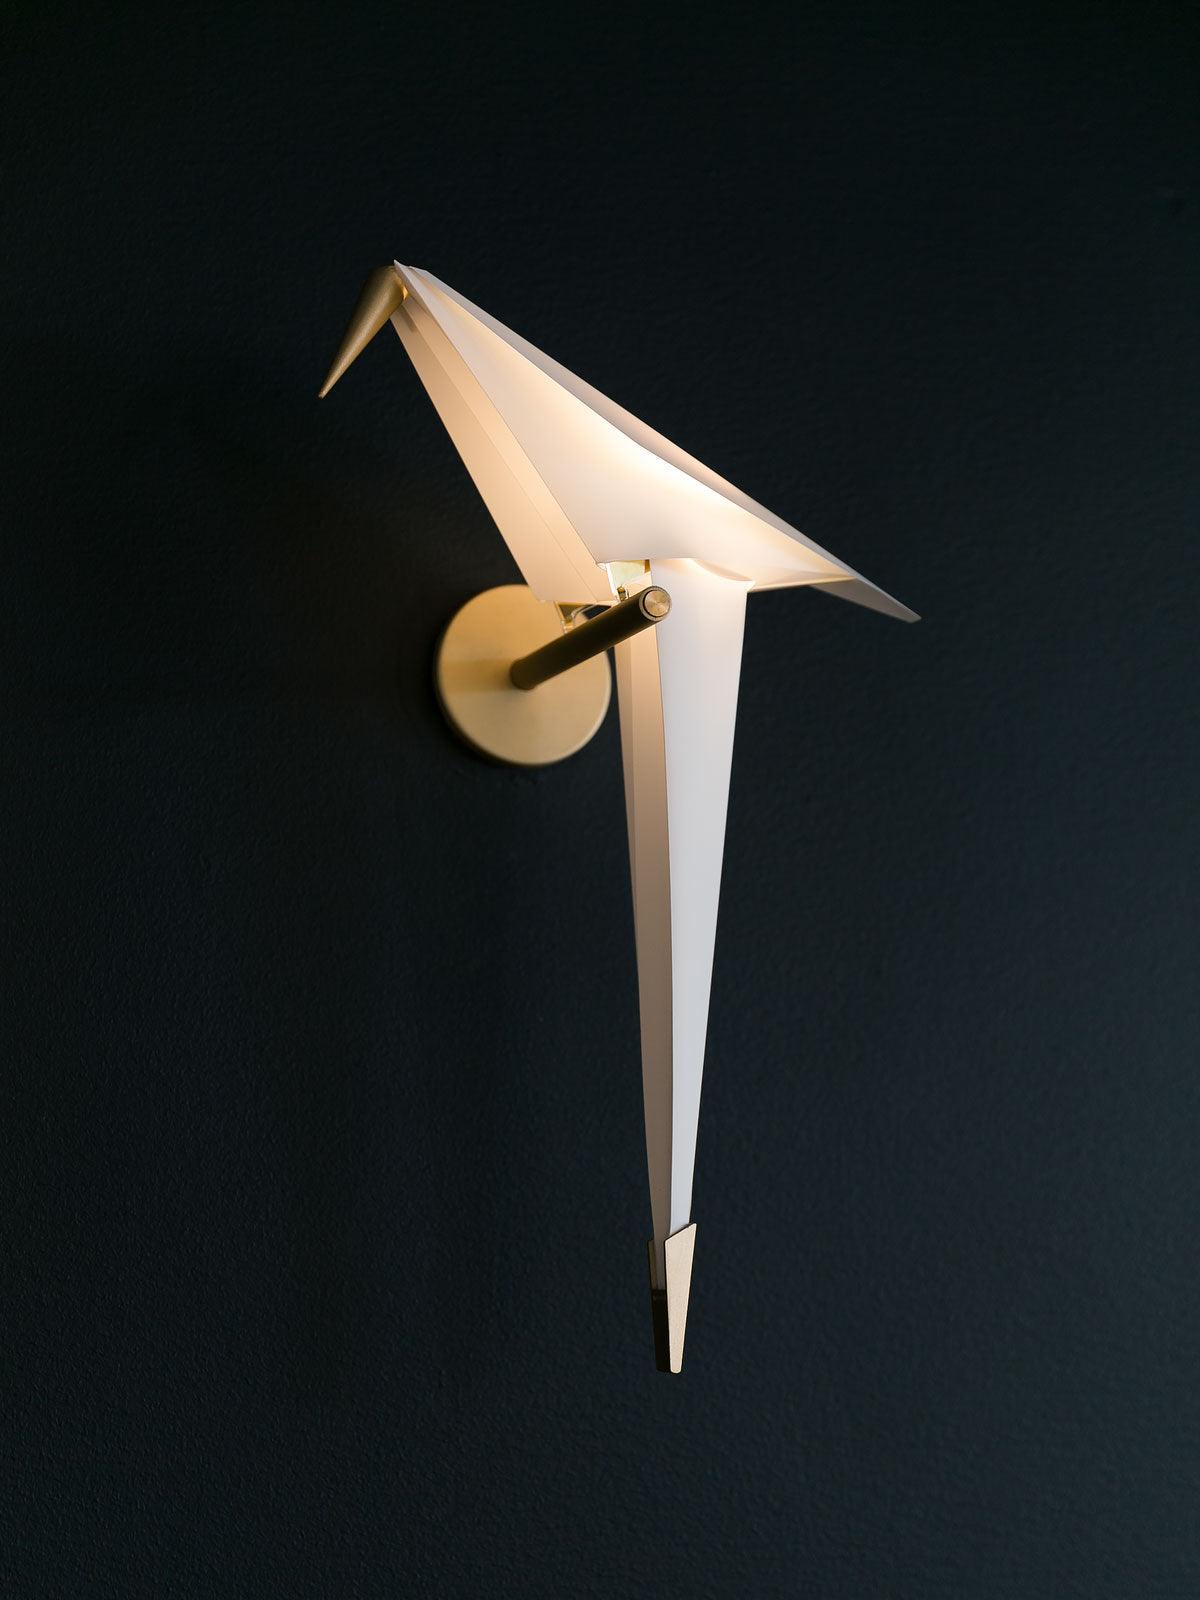 Avian Serenity Wall Lamp